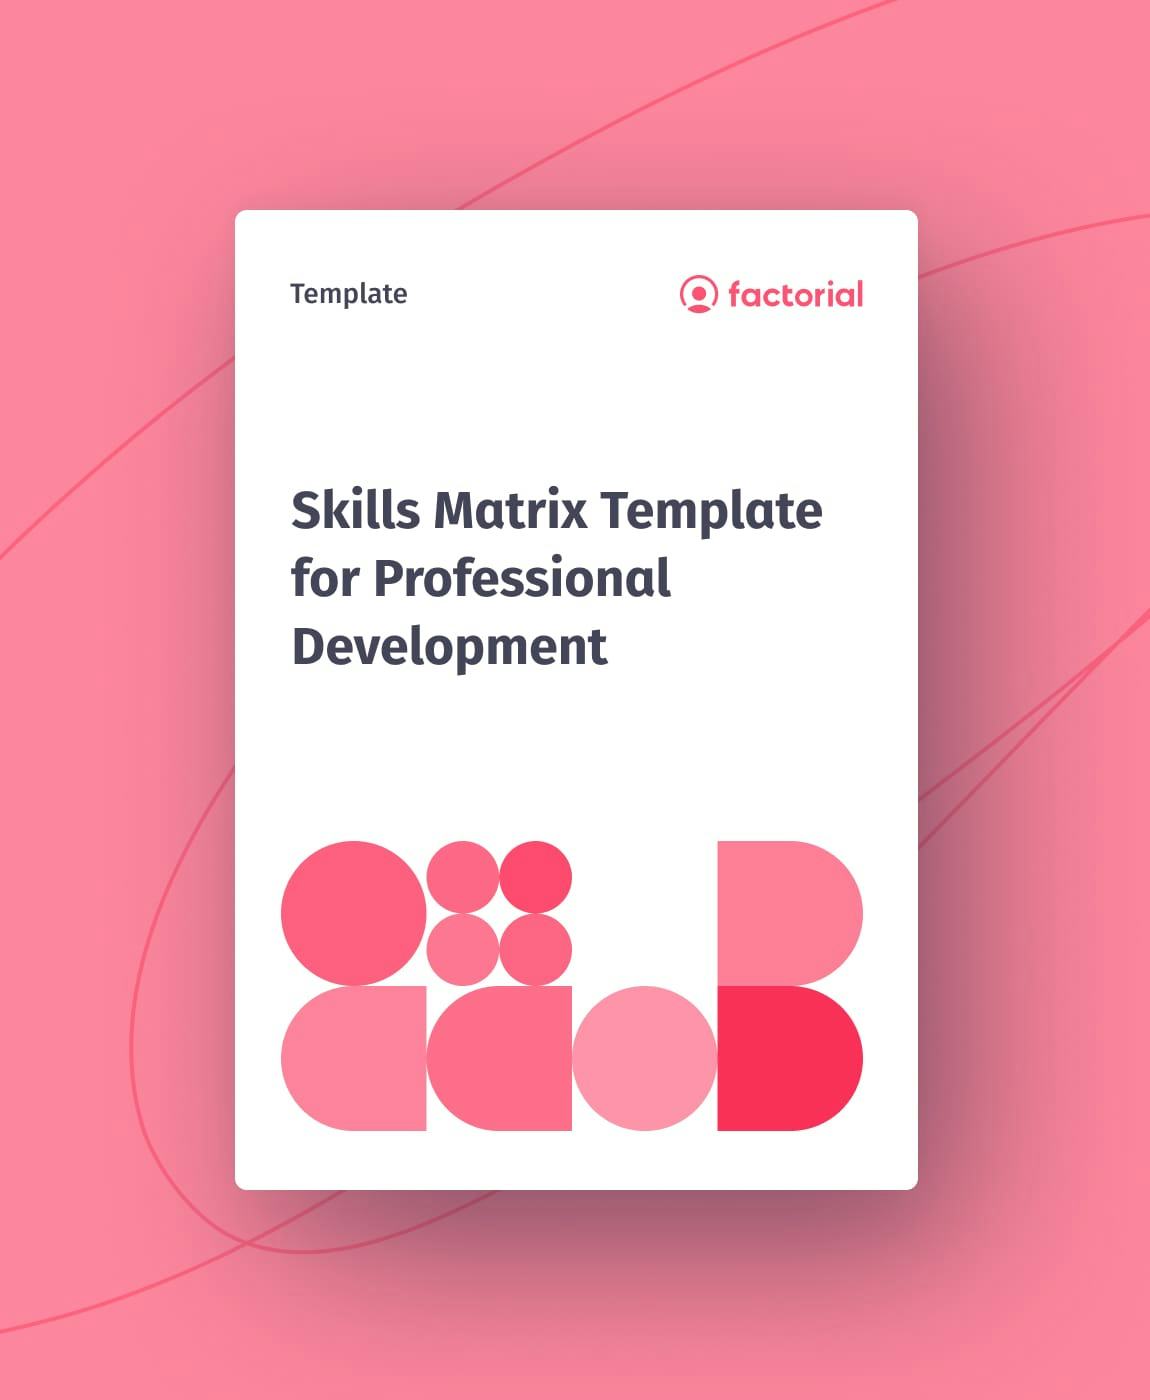 Skills Matrix Template for Professional Development